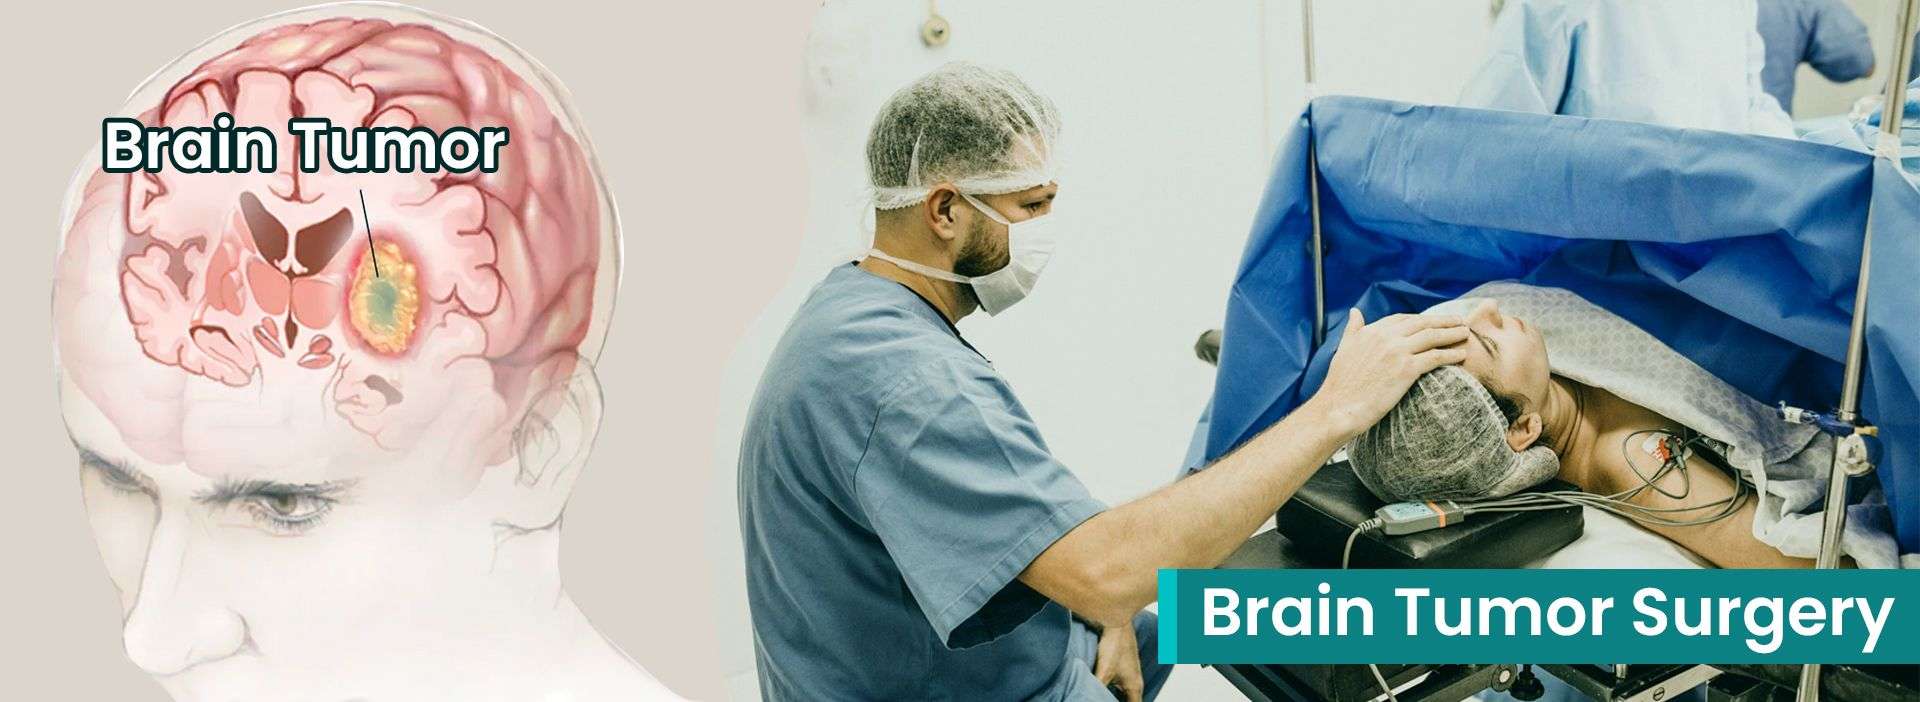 Brain Tumor Surgery In India – Treatment Options | Dr. Gurneet Sawhney